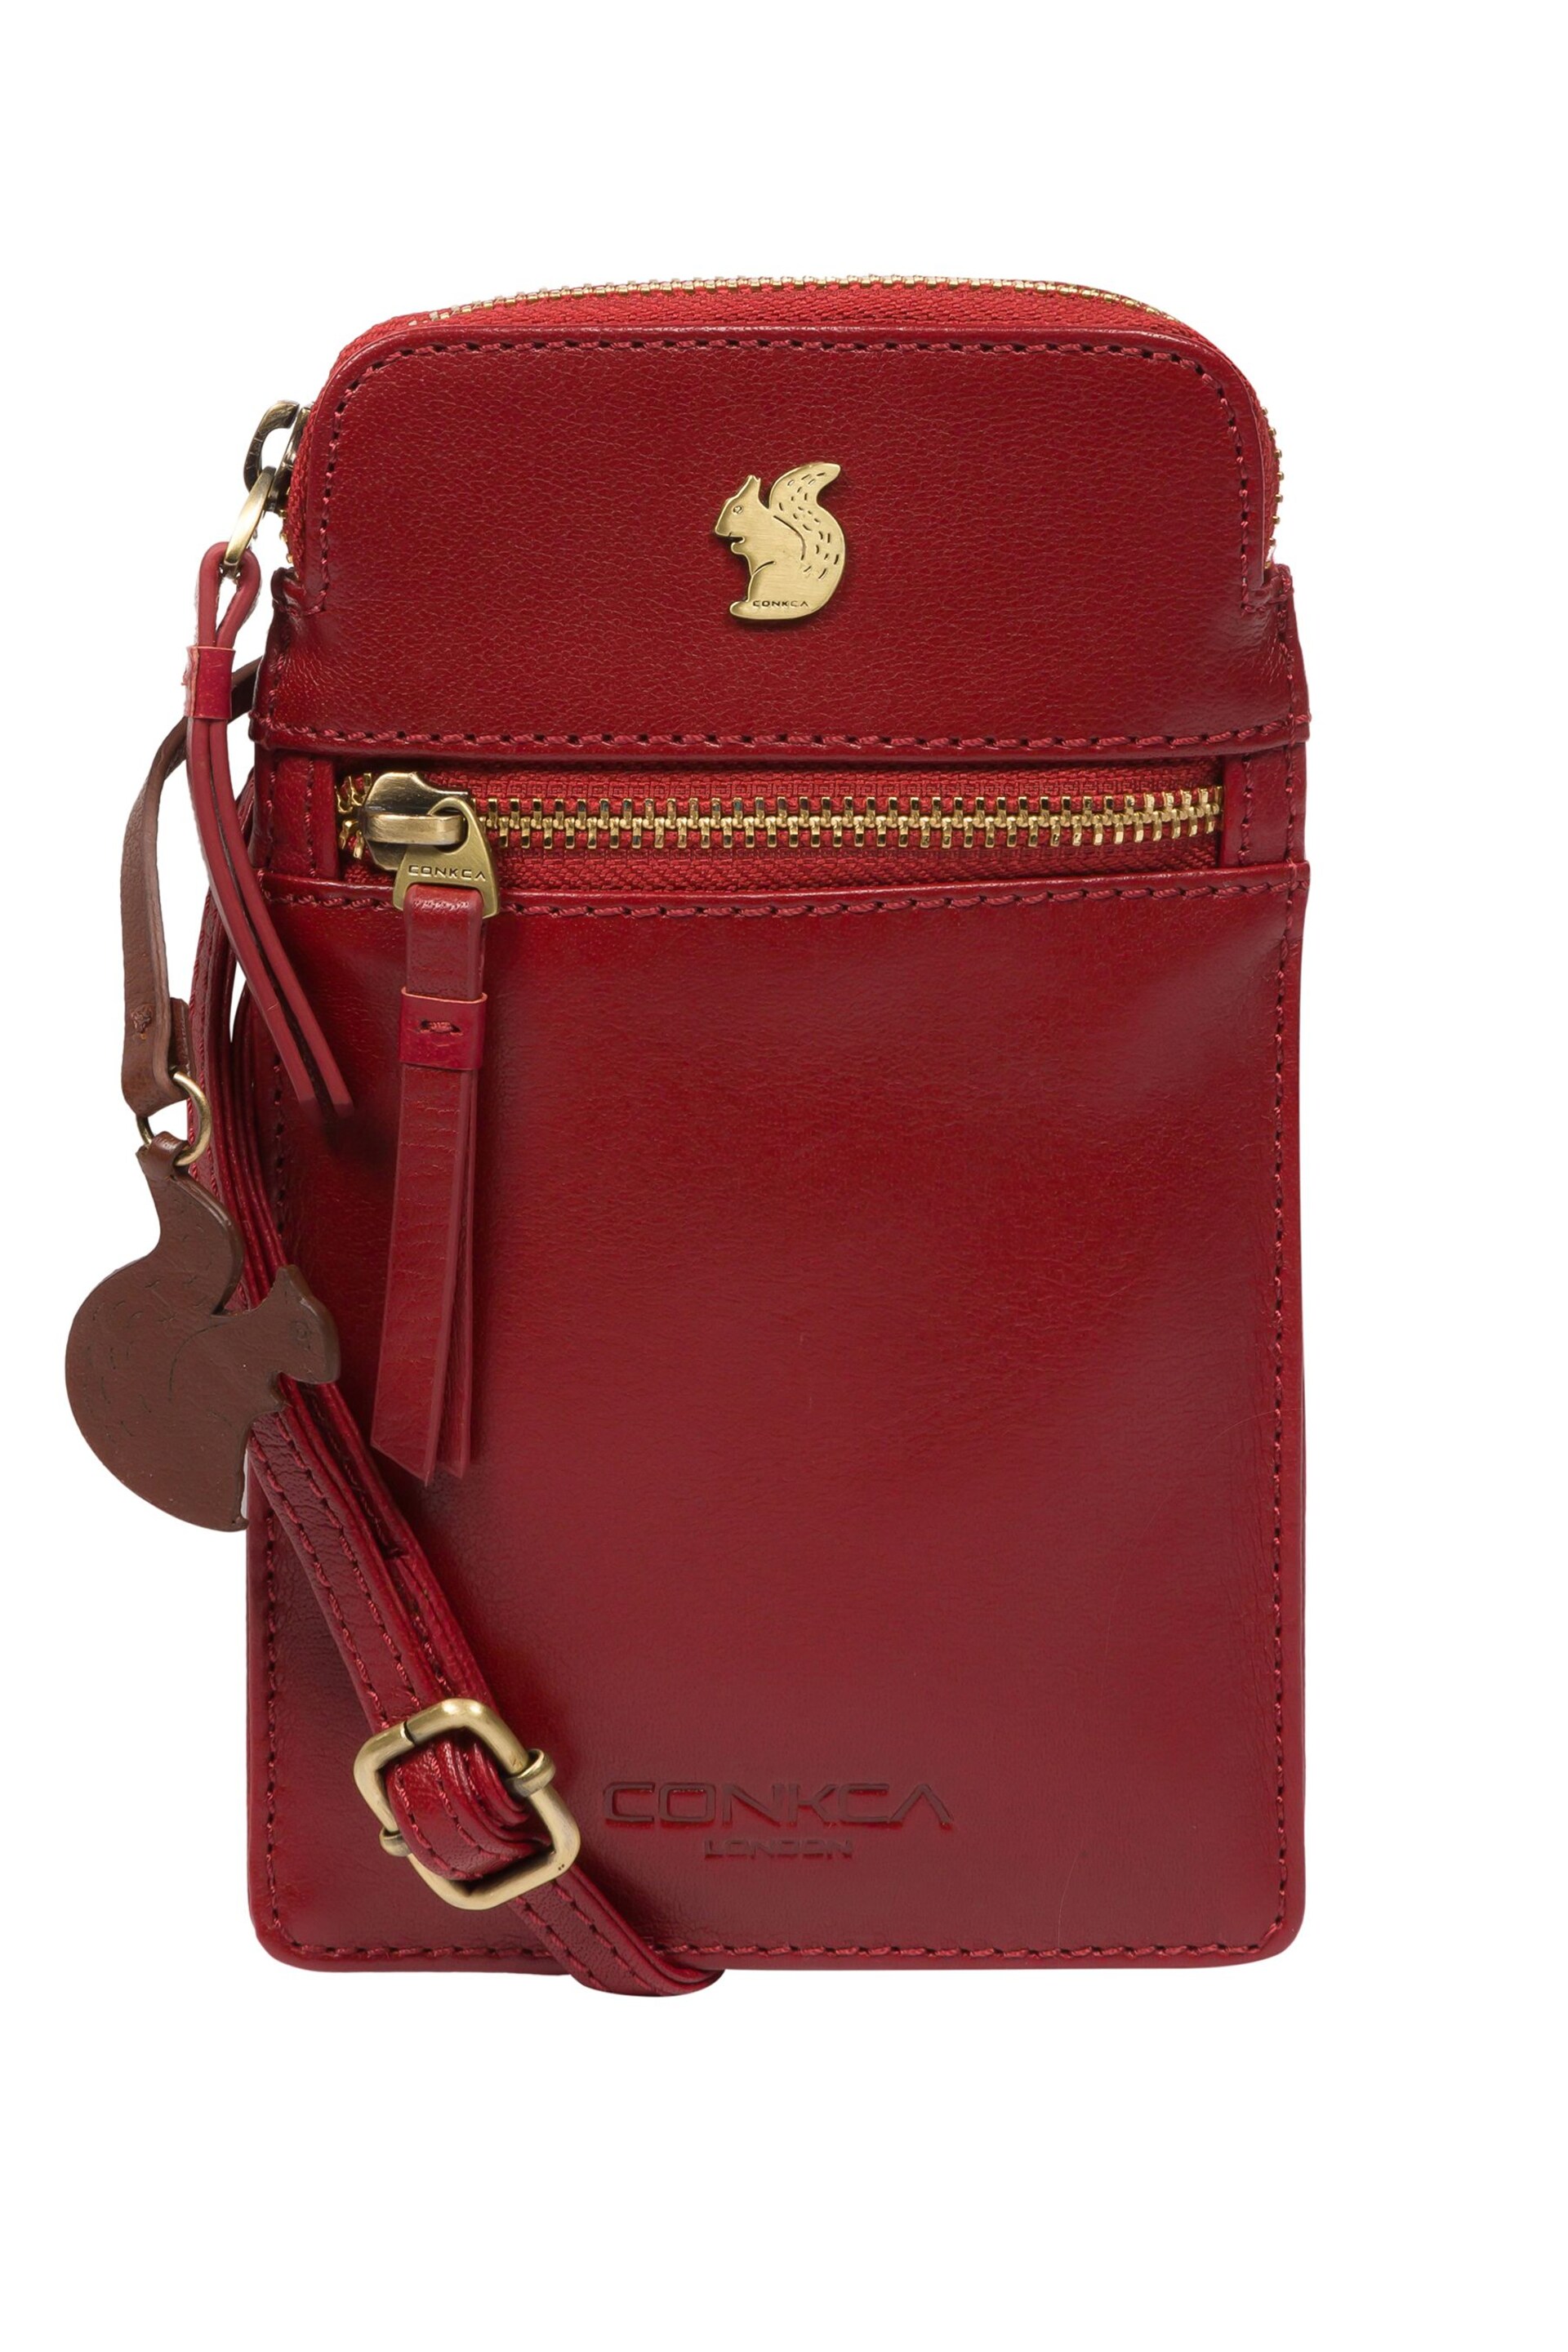 Conkca Bambino Leather Cross-Body Phone Bag - Image 4 of 9